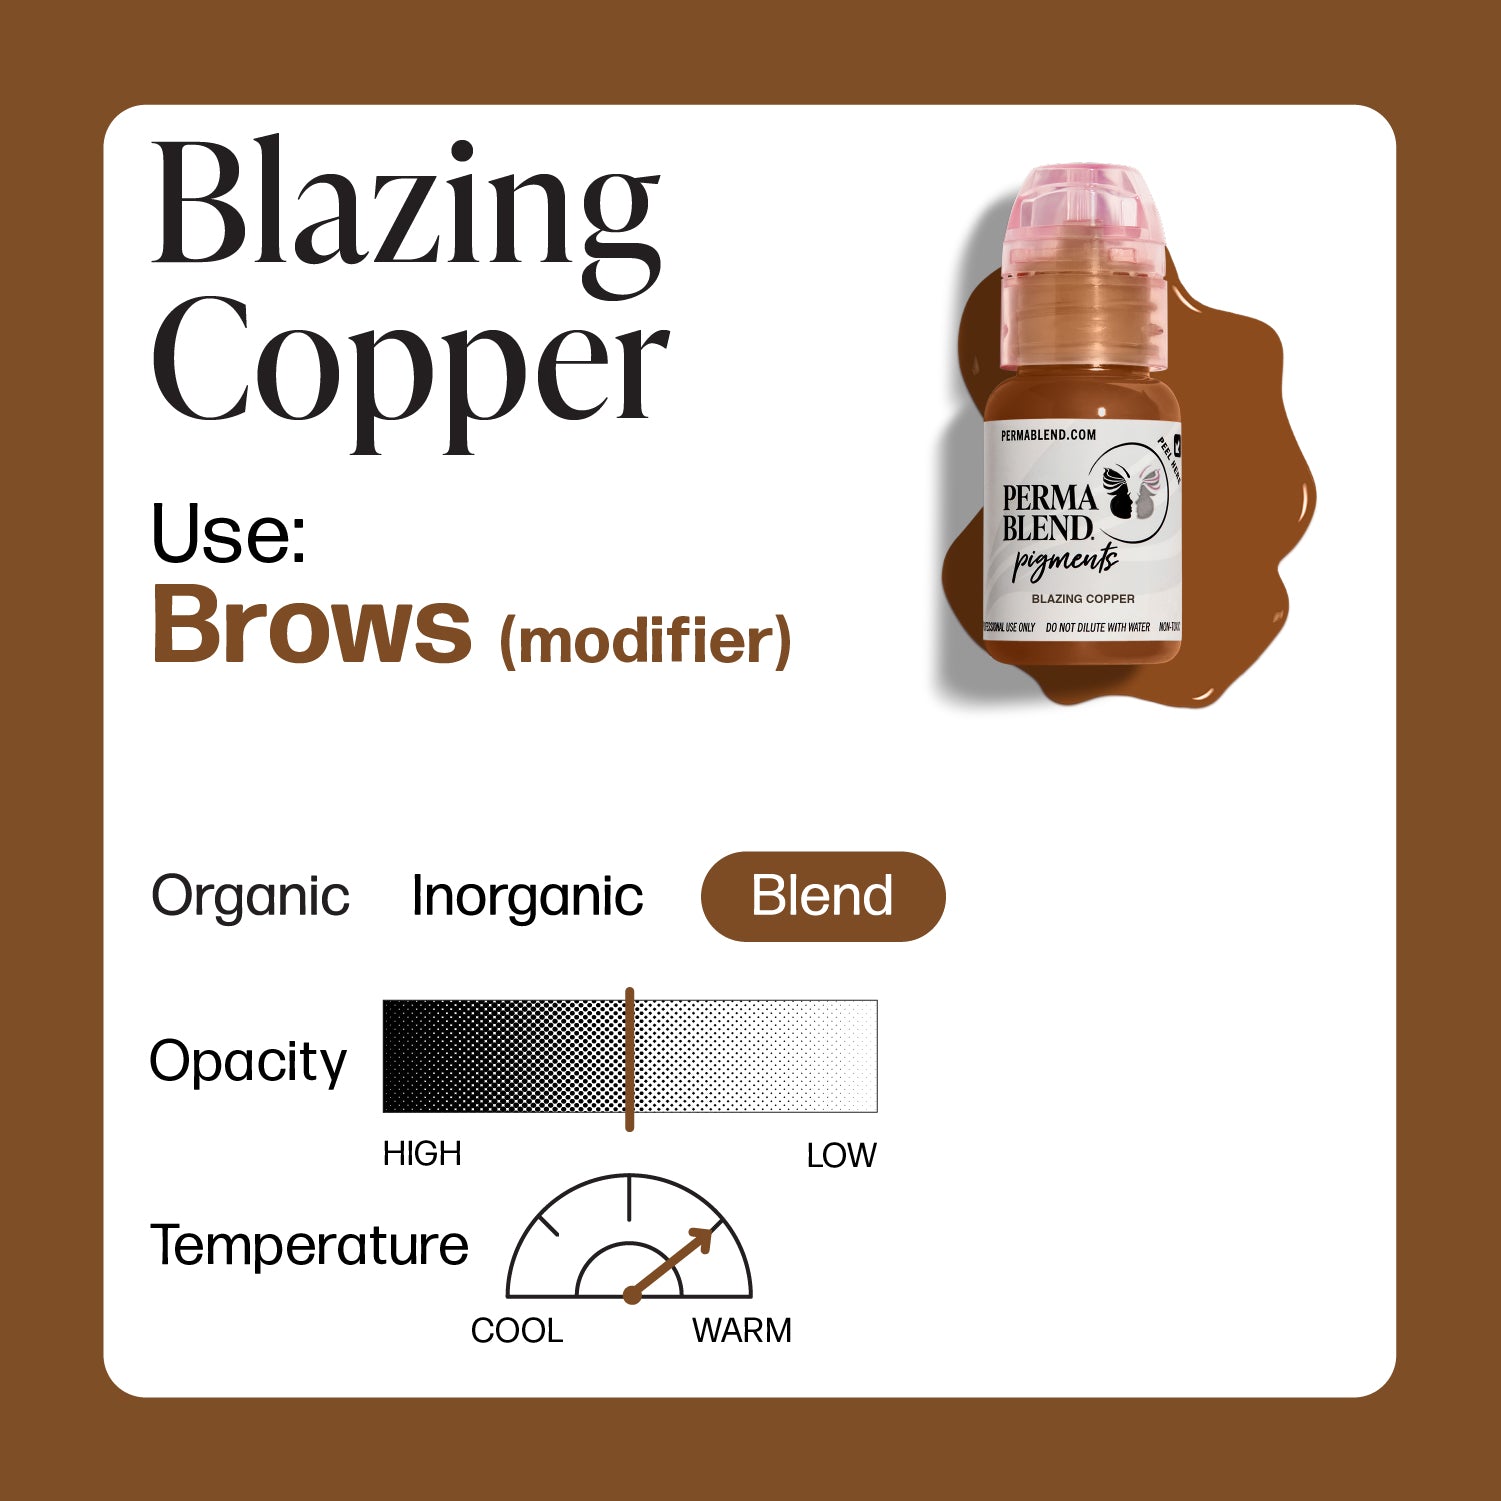 Blazing Copper